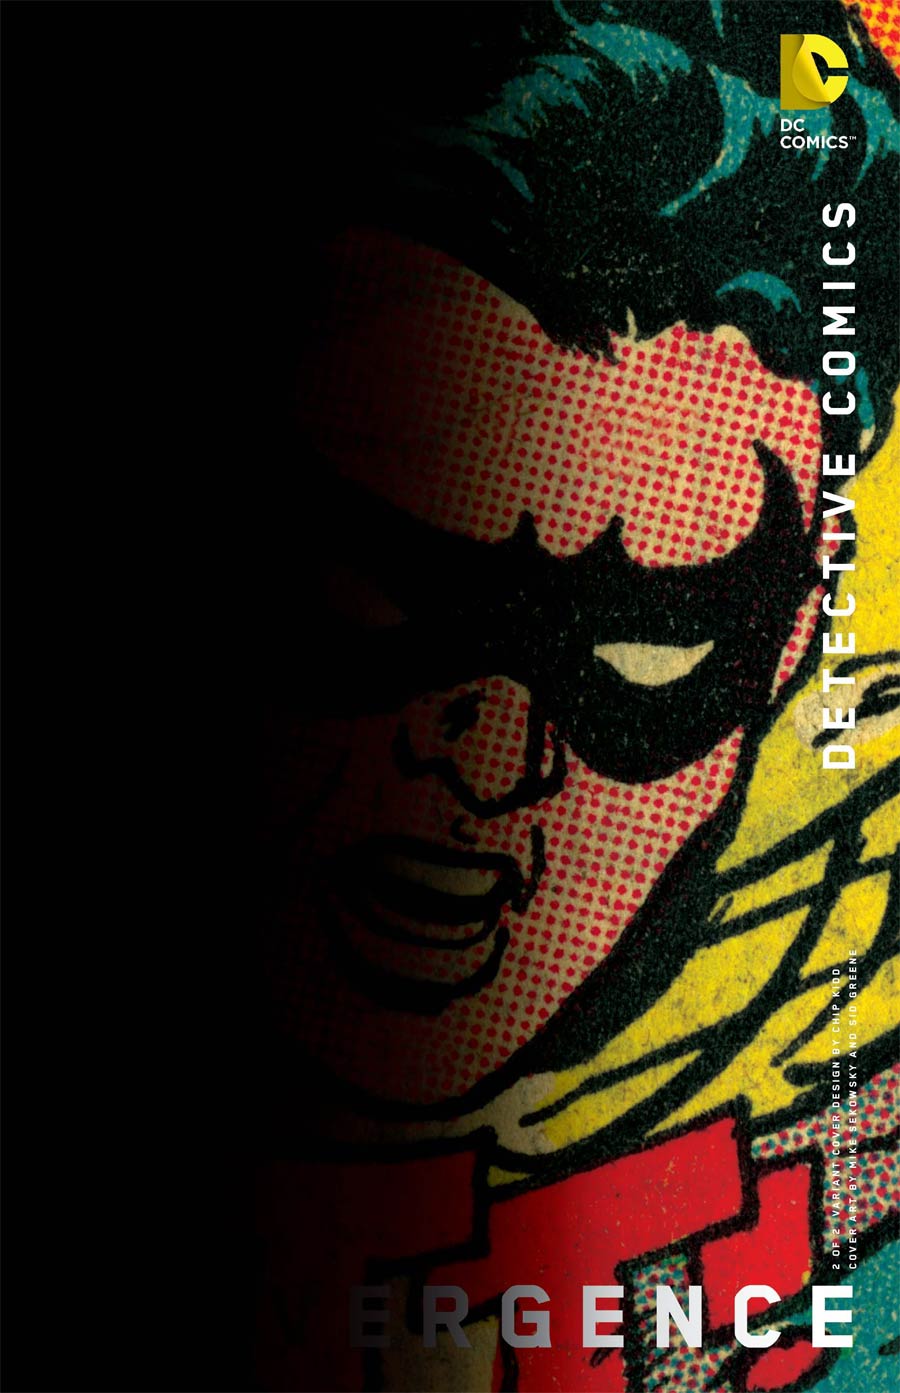 Convergence: Detective Comics #2